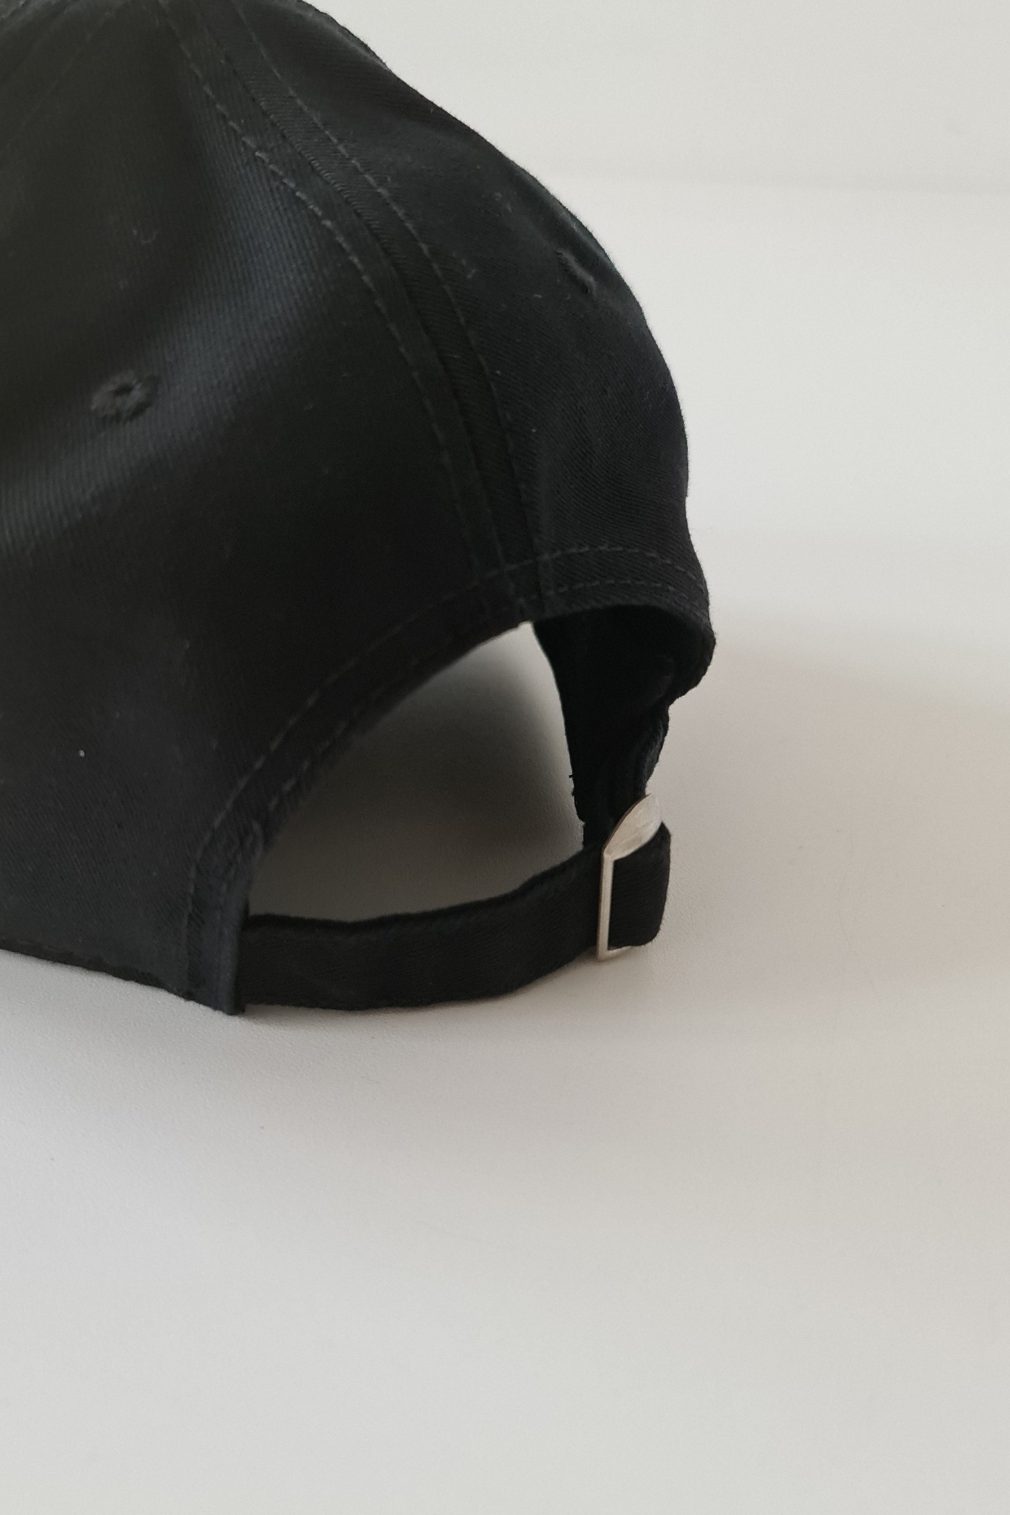 juoda kepurė su baltu logo | unlabel